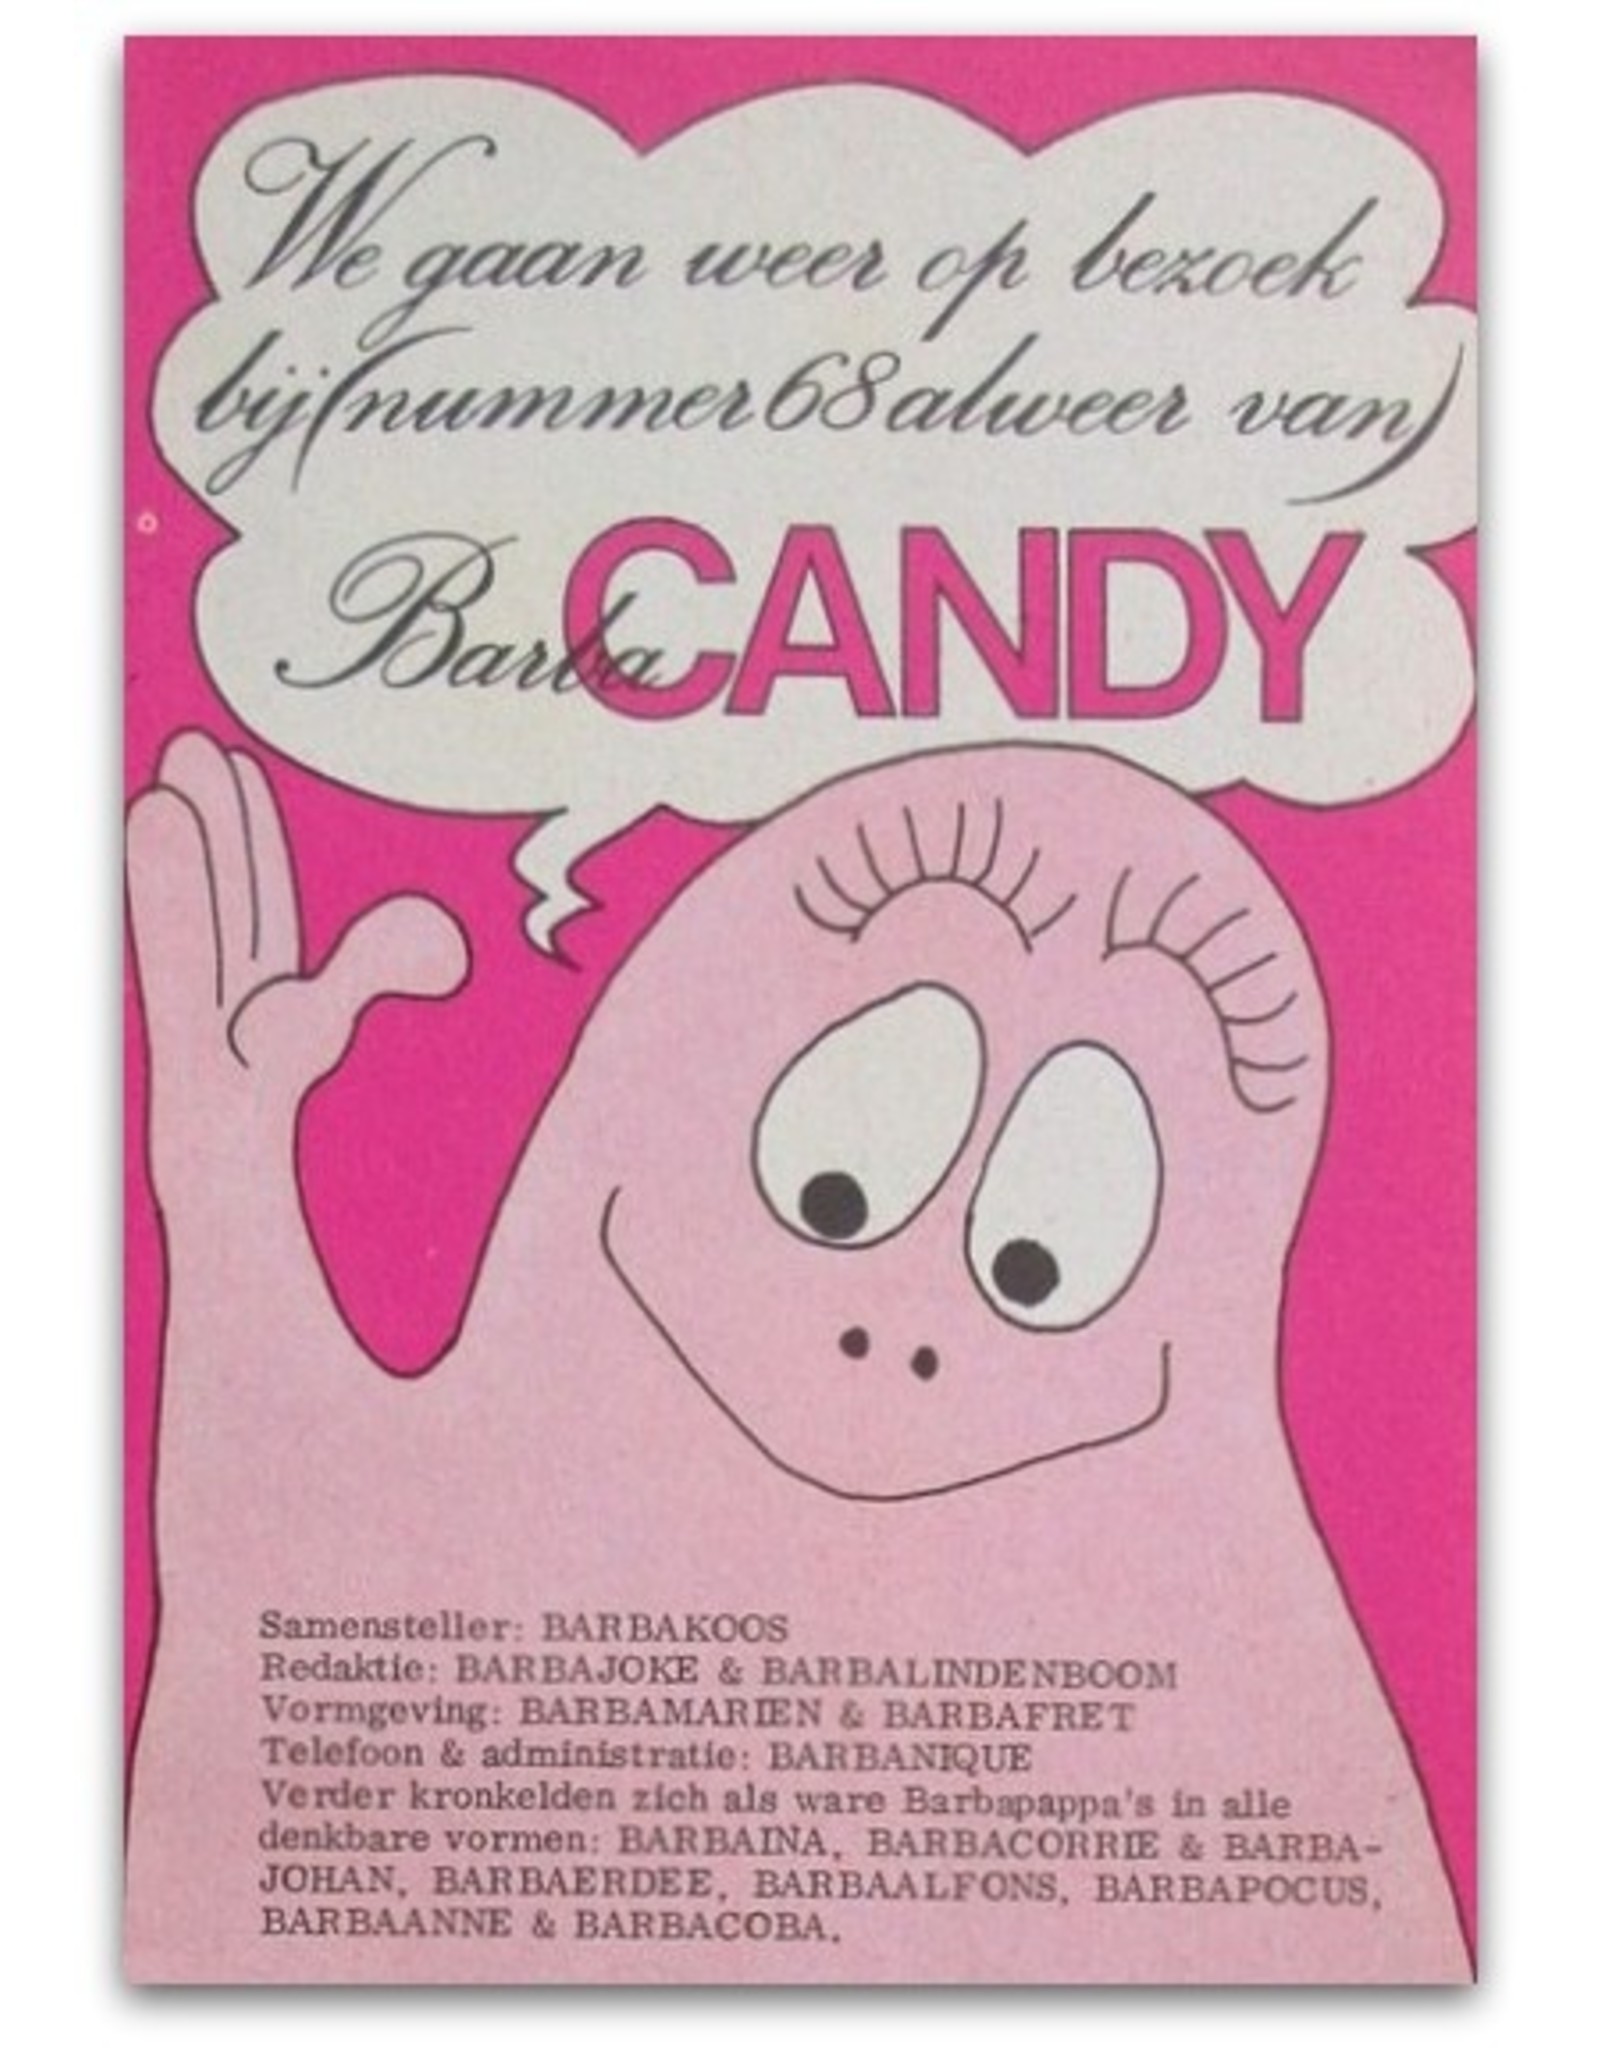 Barbakoos [sst.] - Candy Nr 68: ["Barbacandy"]